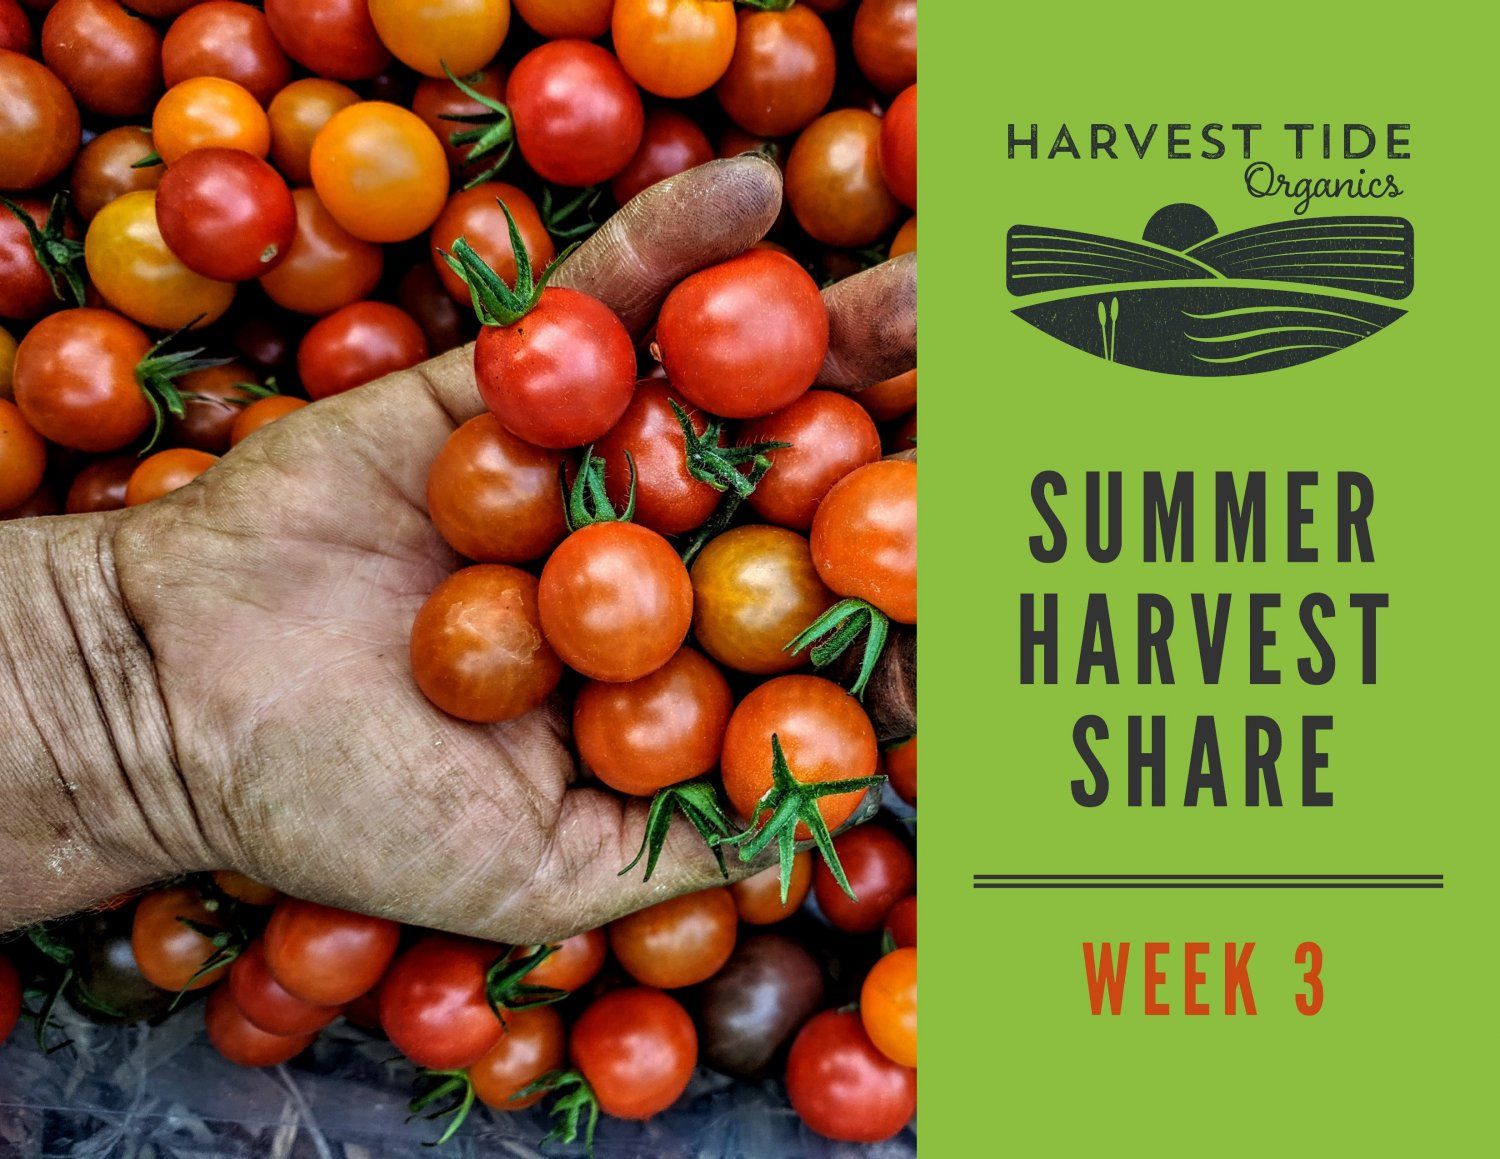 Next Happening: Summer Harvest Share - Week 3